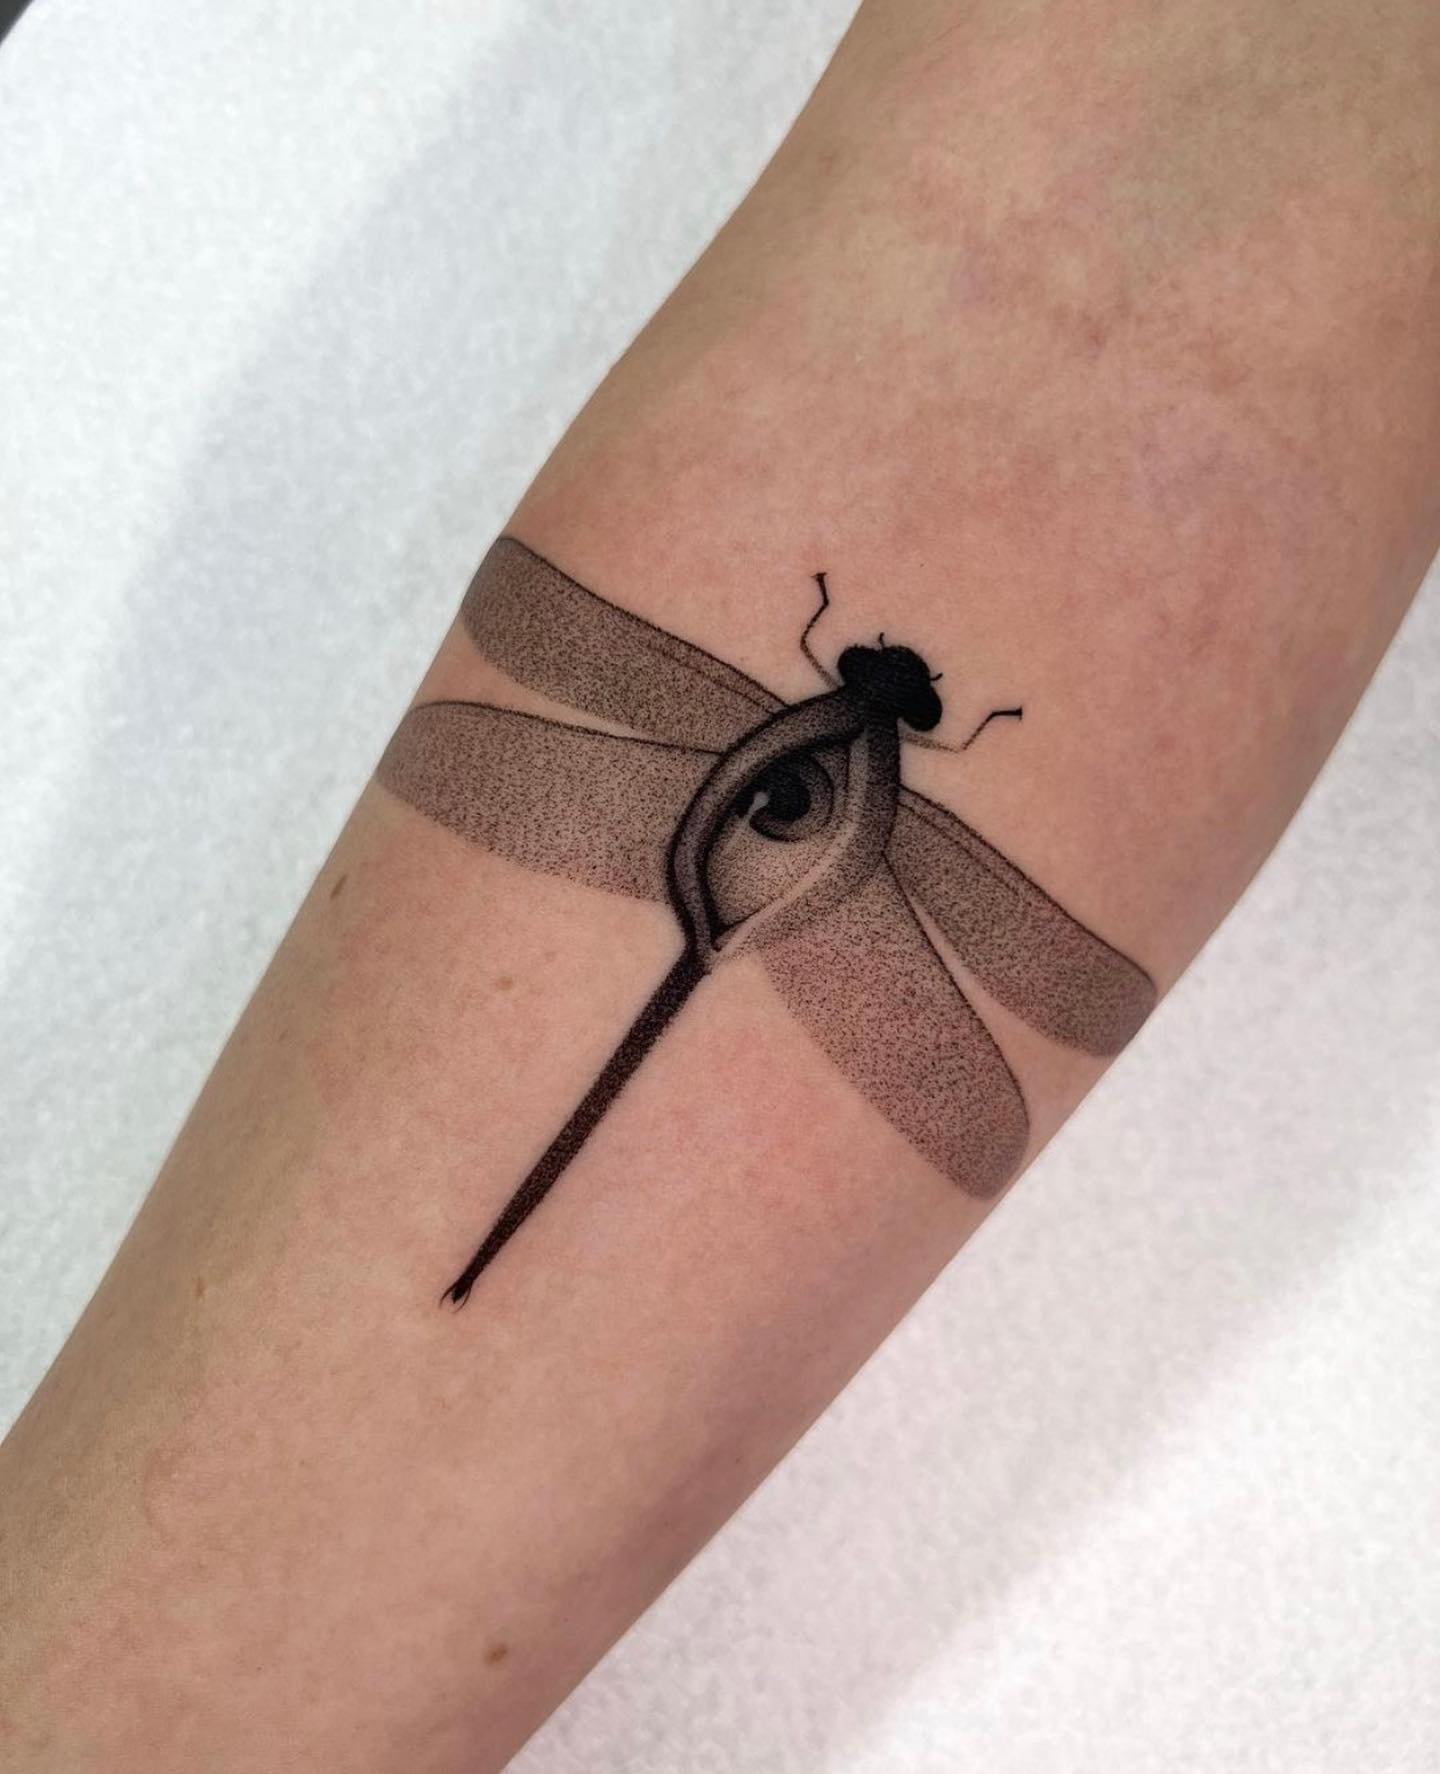 Tatuaje de libélula pequeña y negra.